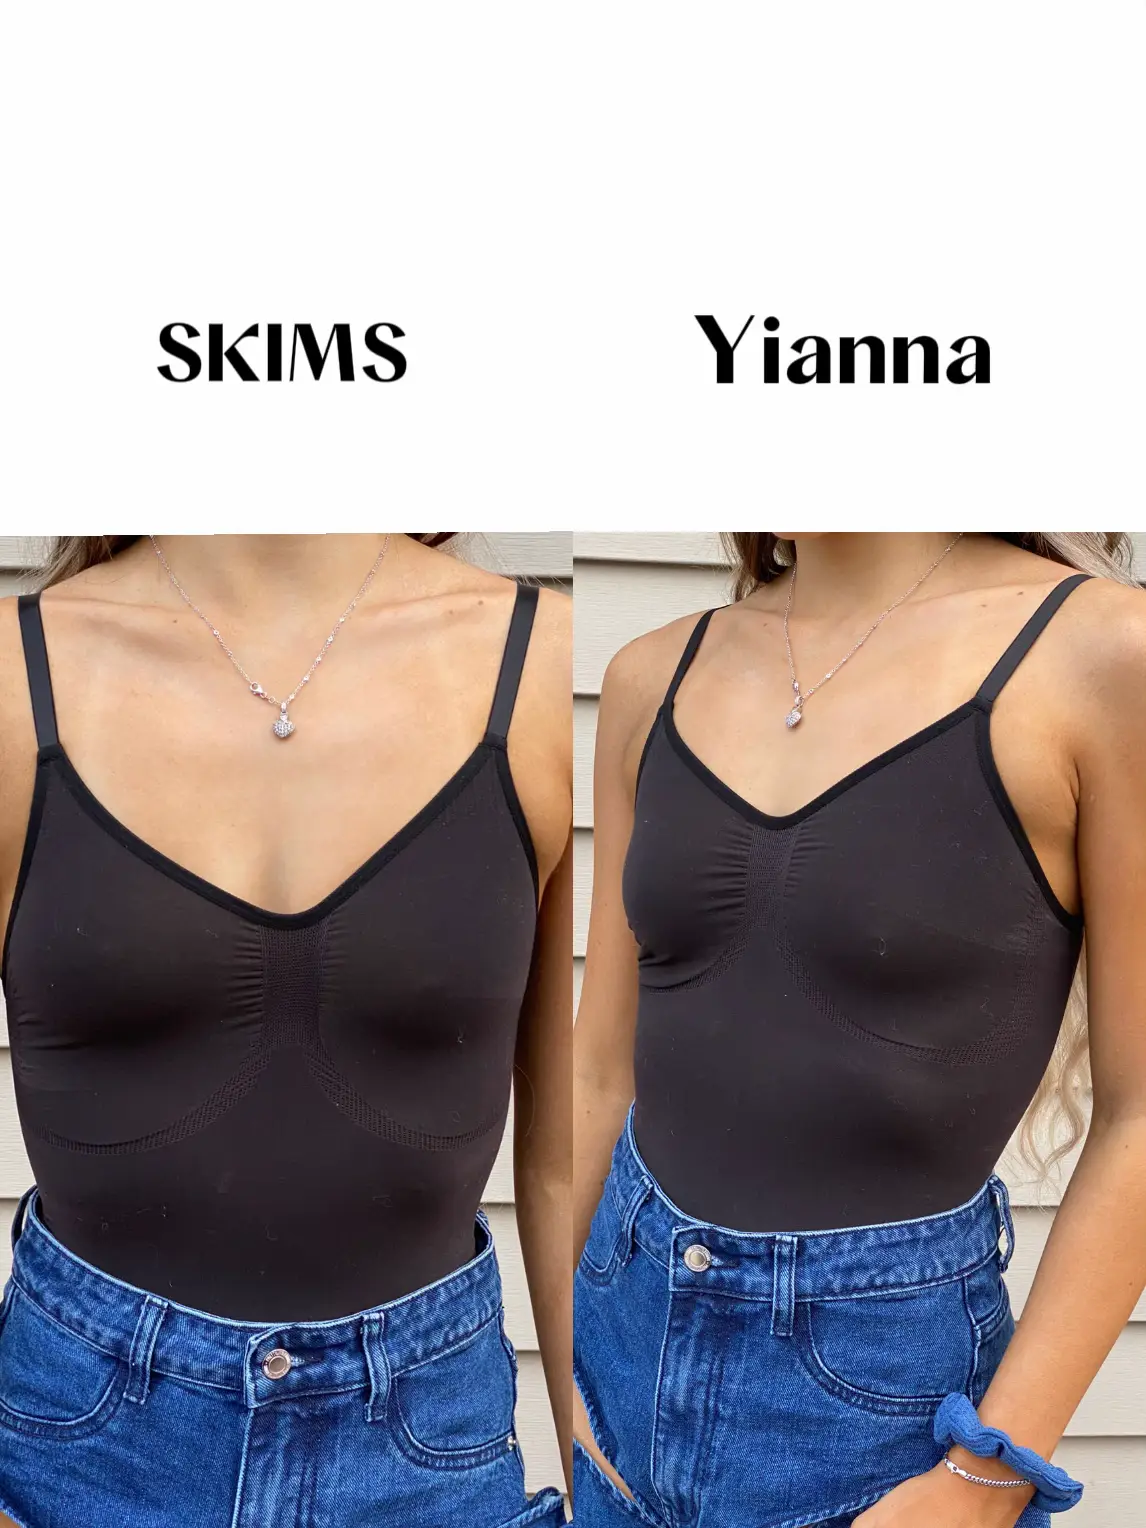 YIANNA Sculpting Bodysuit for Women Tummy Control Seamless